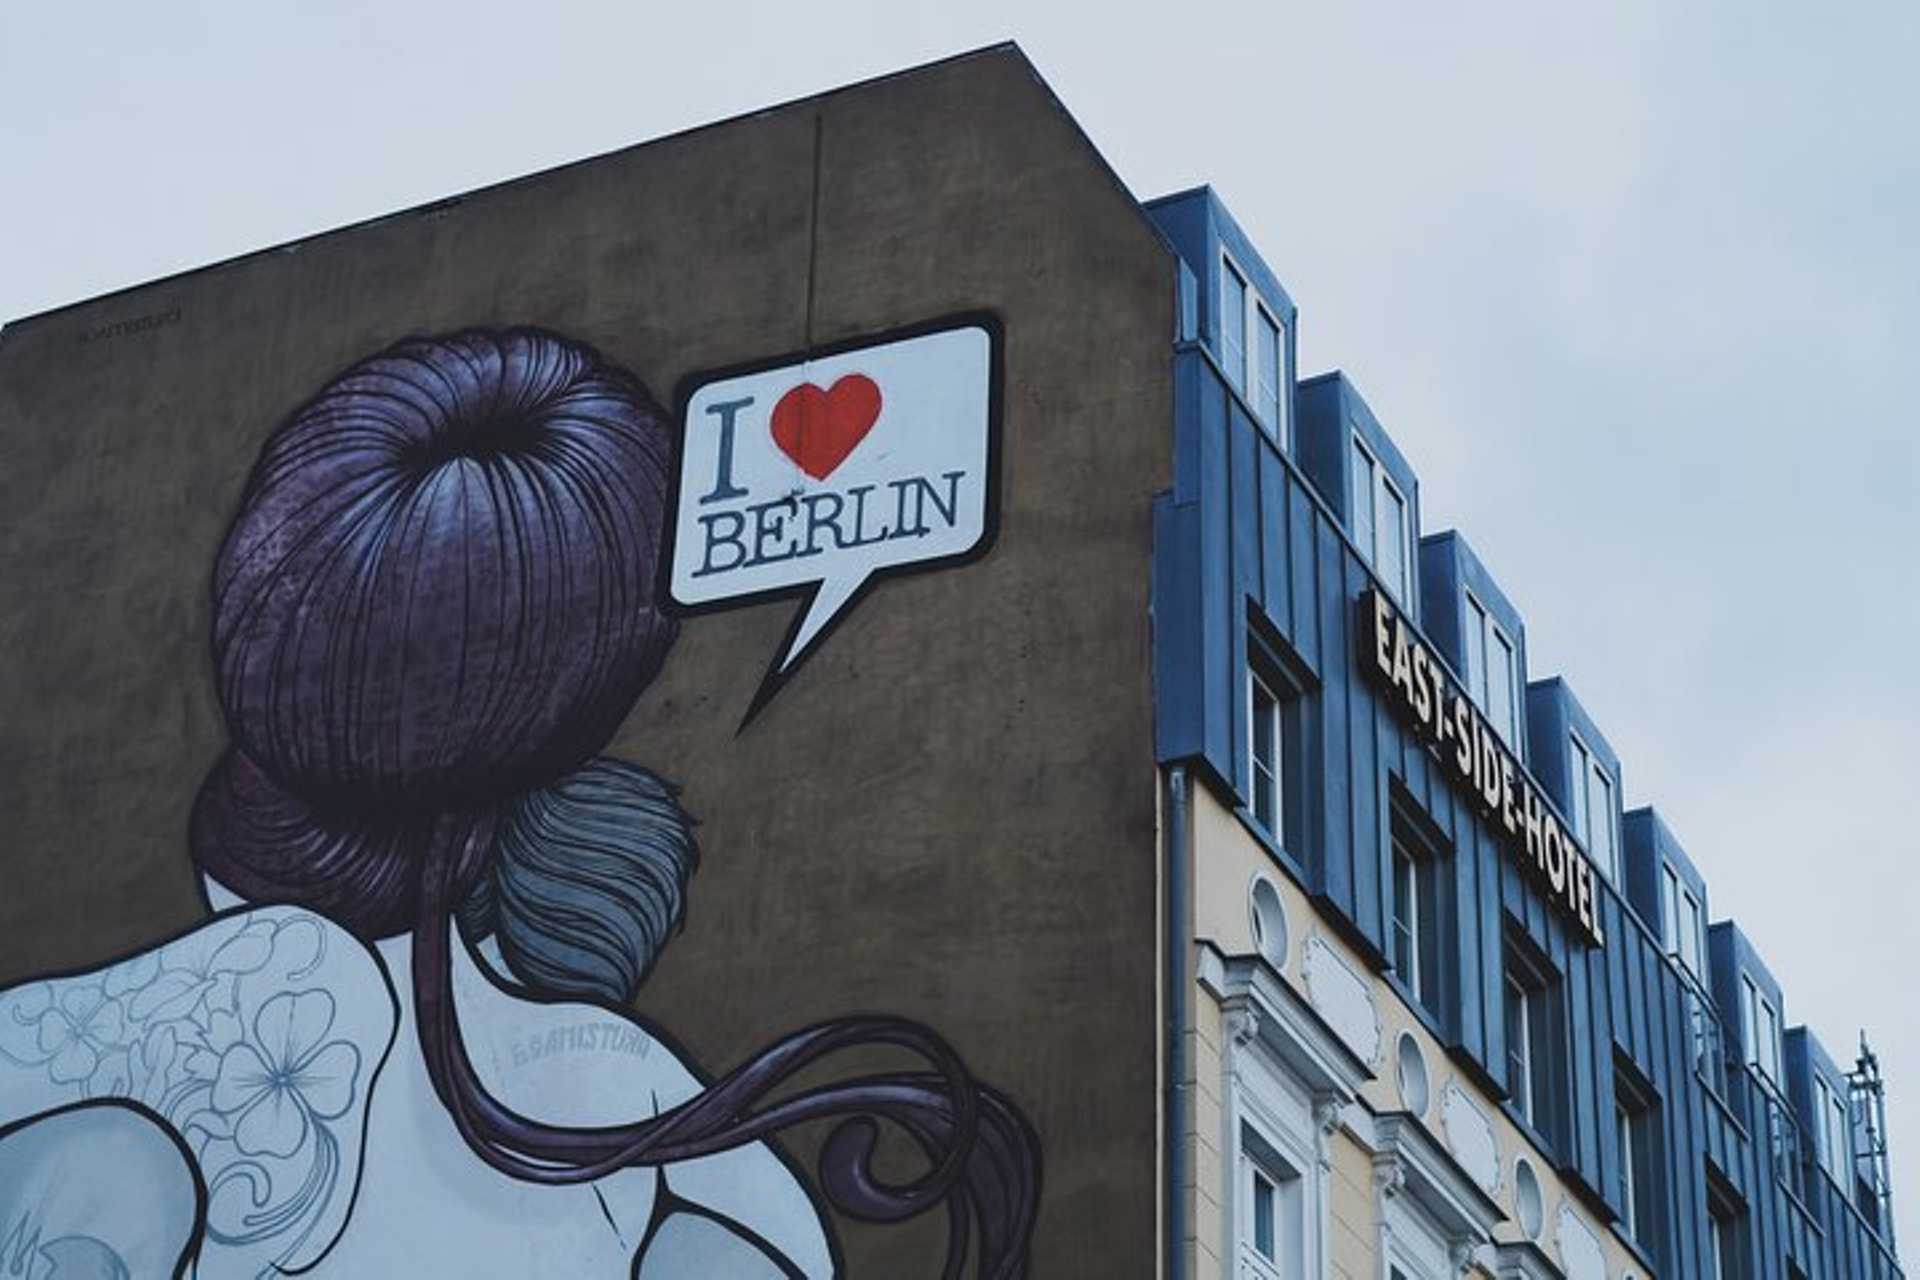 Private Berlin Street Art Tour with Graffiti, Murals and Berlin Wall